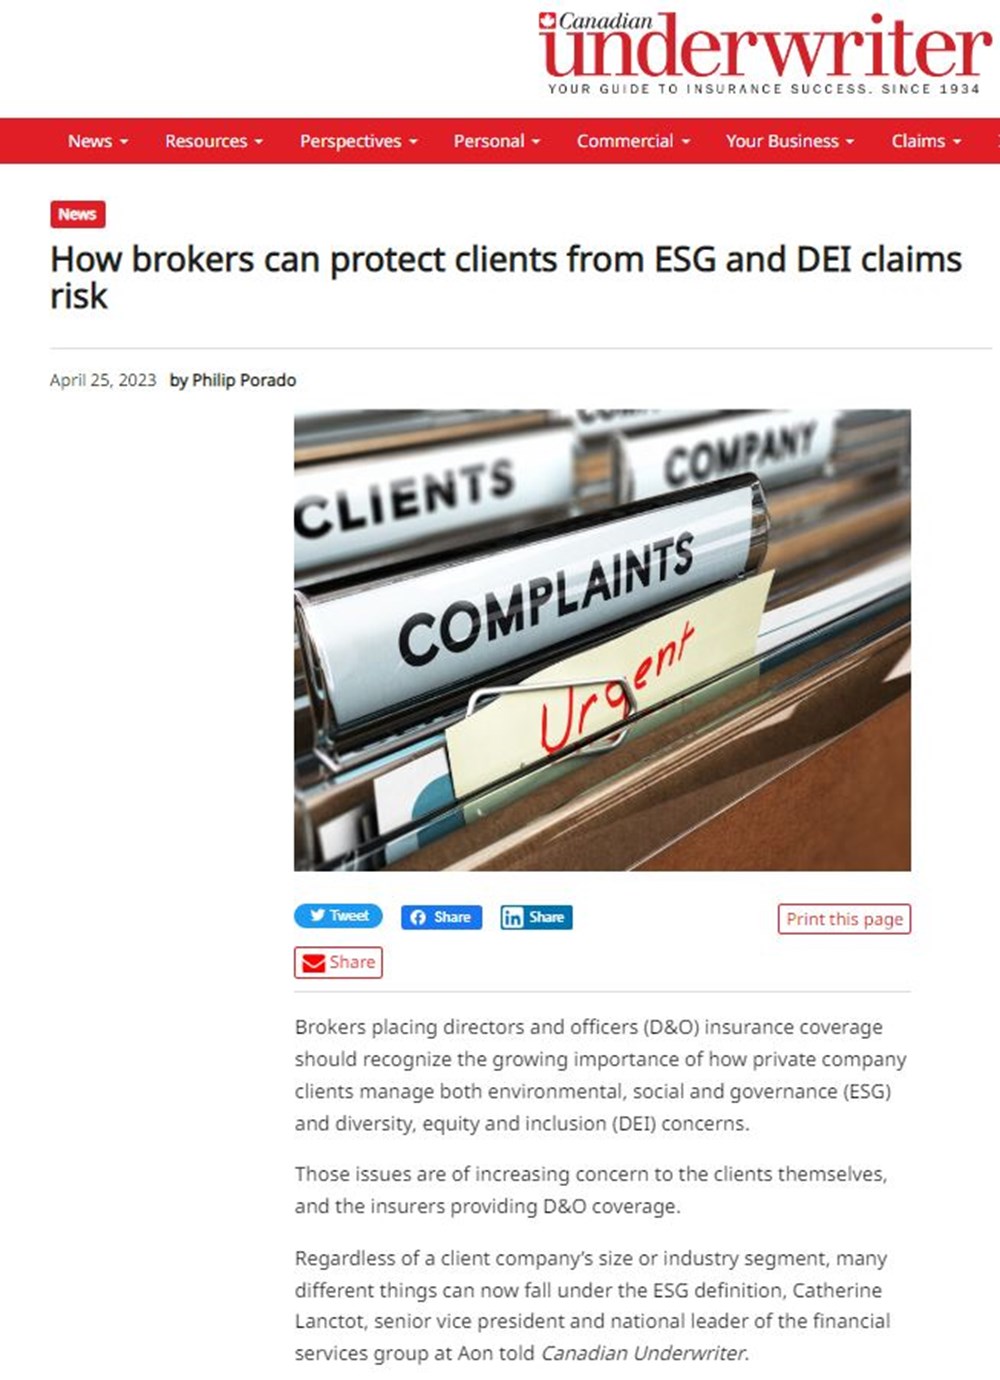 Capture d'écran de l'article "How brokers can protect clients from ESG and DEI claims risk" en anglais